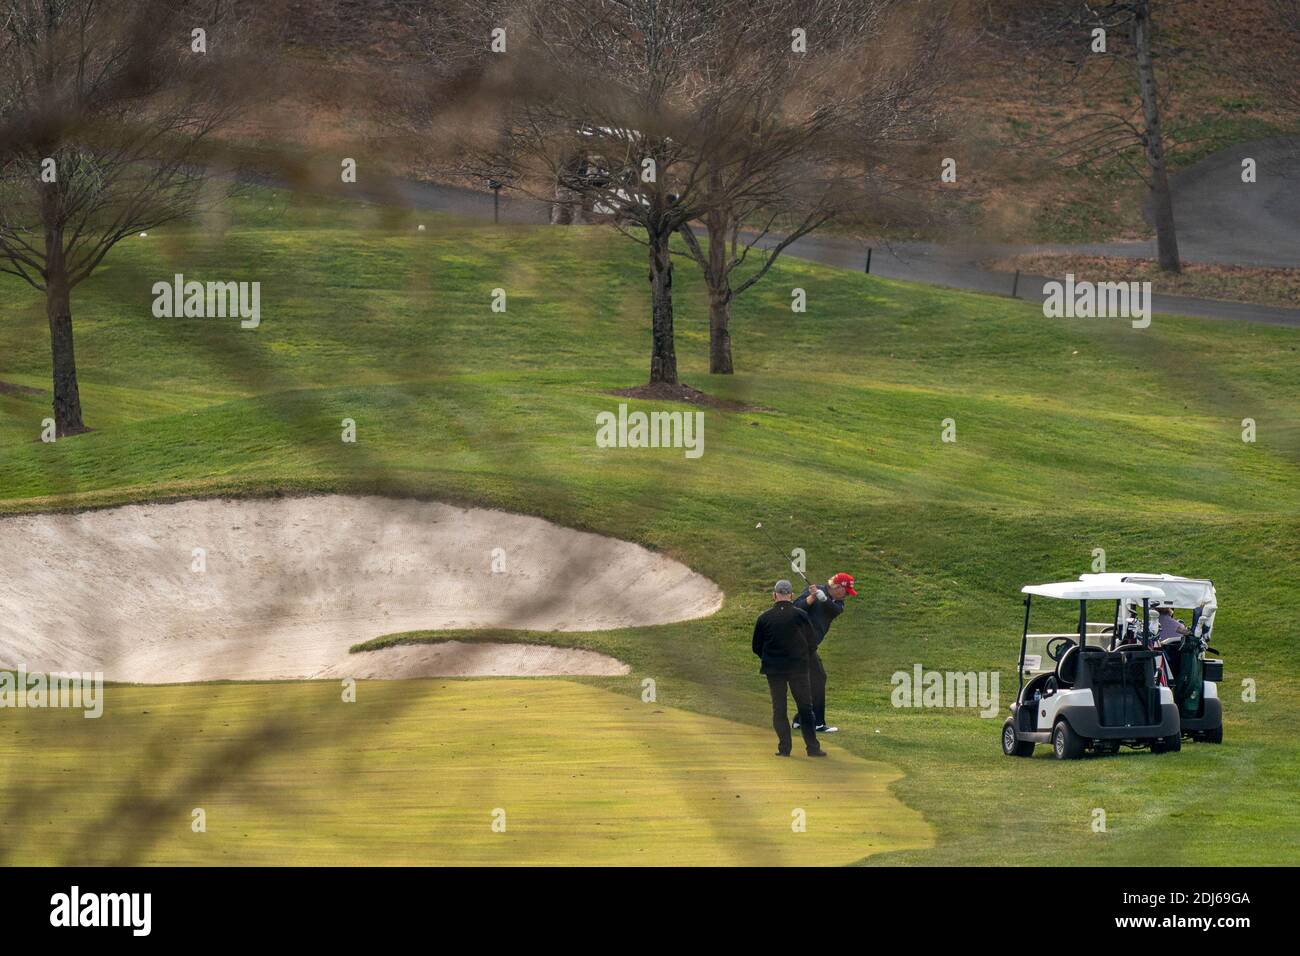 Washington, United States. 13th Dec, 2020. United States President Donald J. Trump plays golf at Trump National Golf Club in Sterling, Virginia on Sunday, December 13, 2020. Photo by Ken Cedeno/UPI Credit: UPI/Alamy Live News Stock Photo